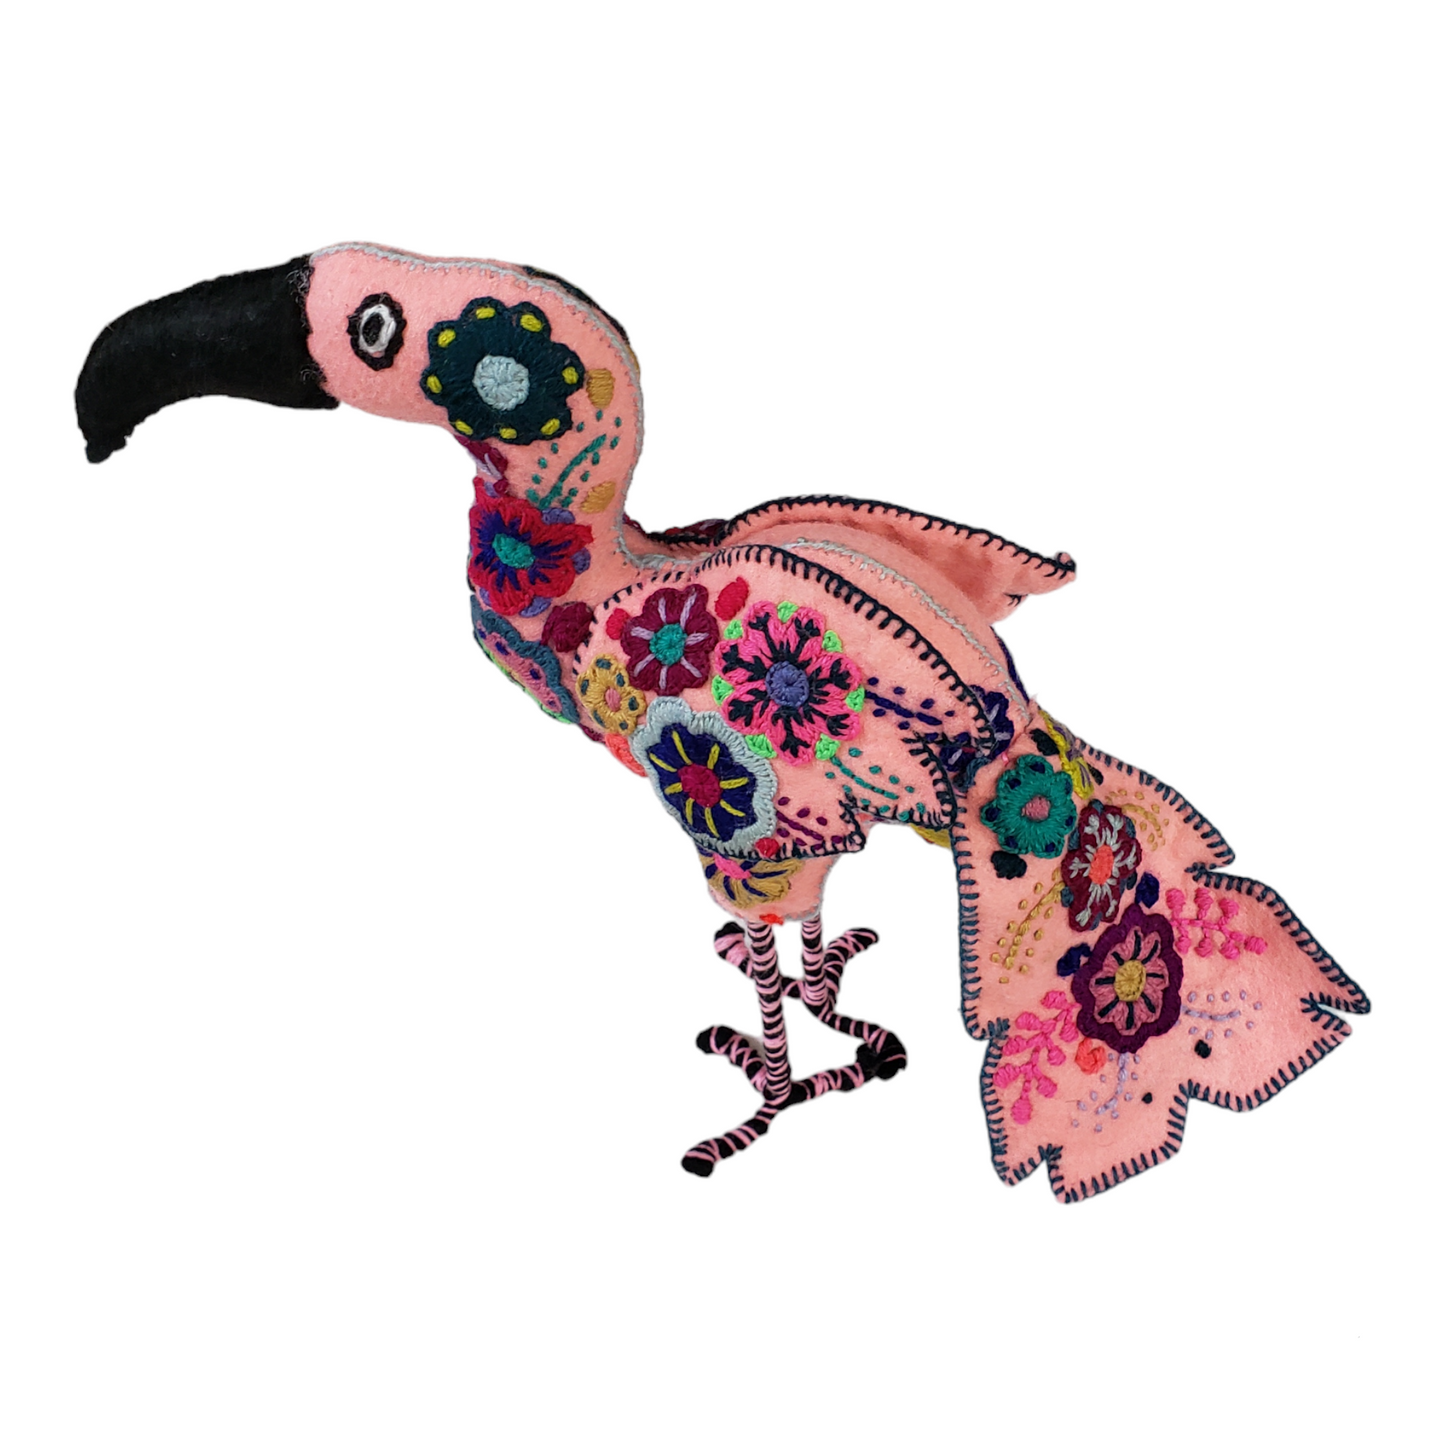 Flamingo Animalito from Chiapas Mexico